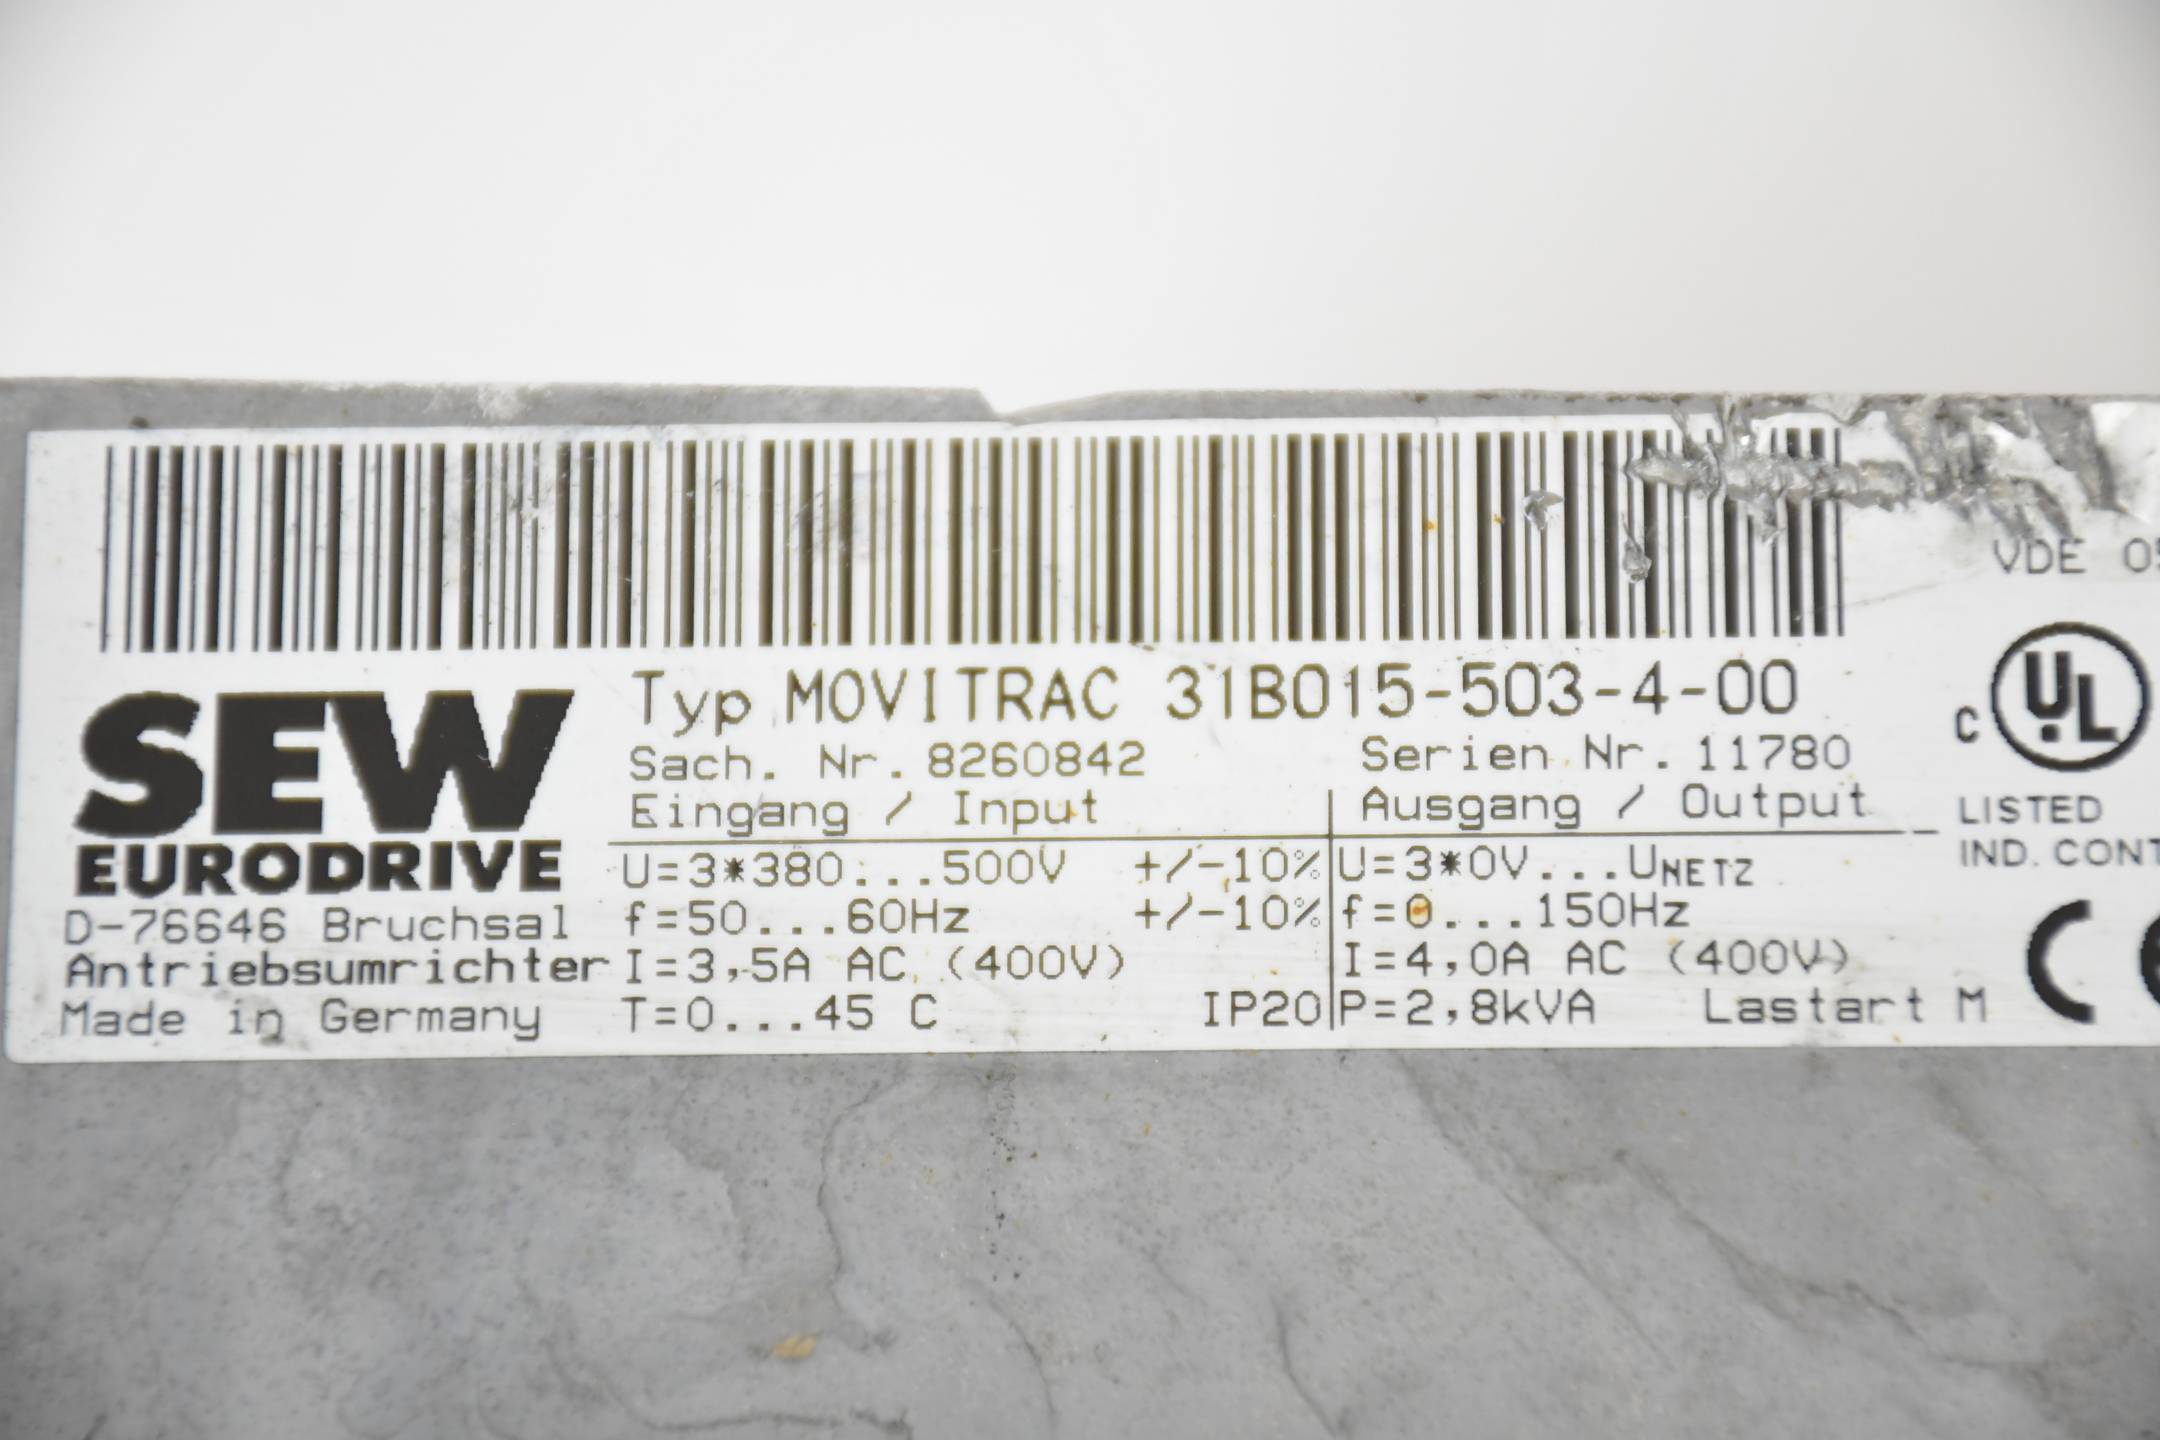 SEW Eurodrive movitrac® 31C Frequenzumrichter 31B015-503-4-00 ( 8260842 )